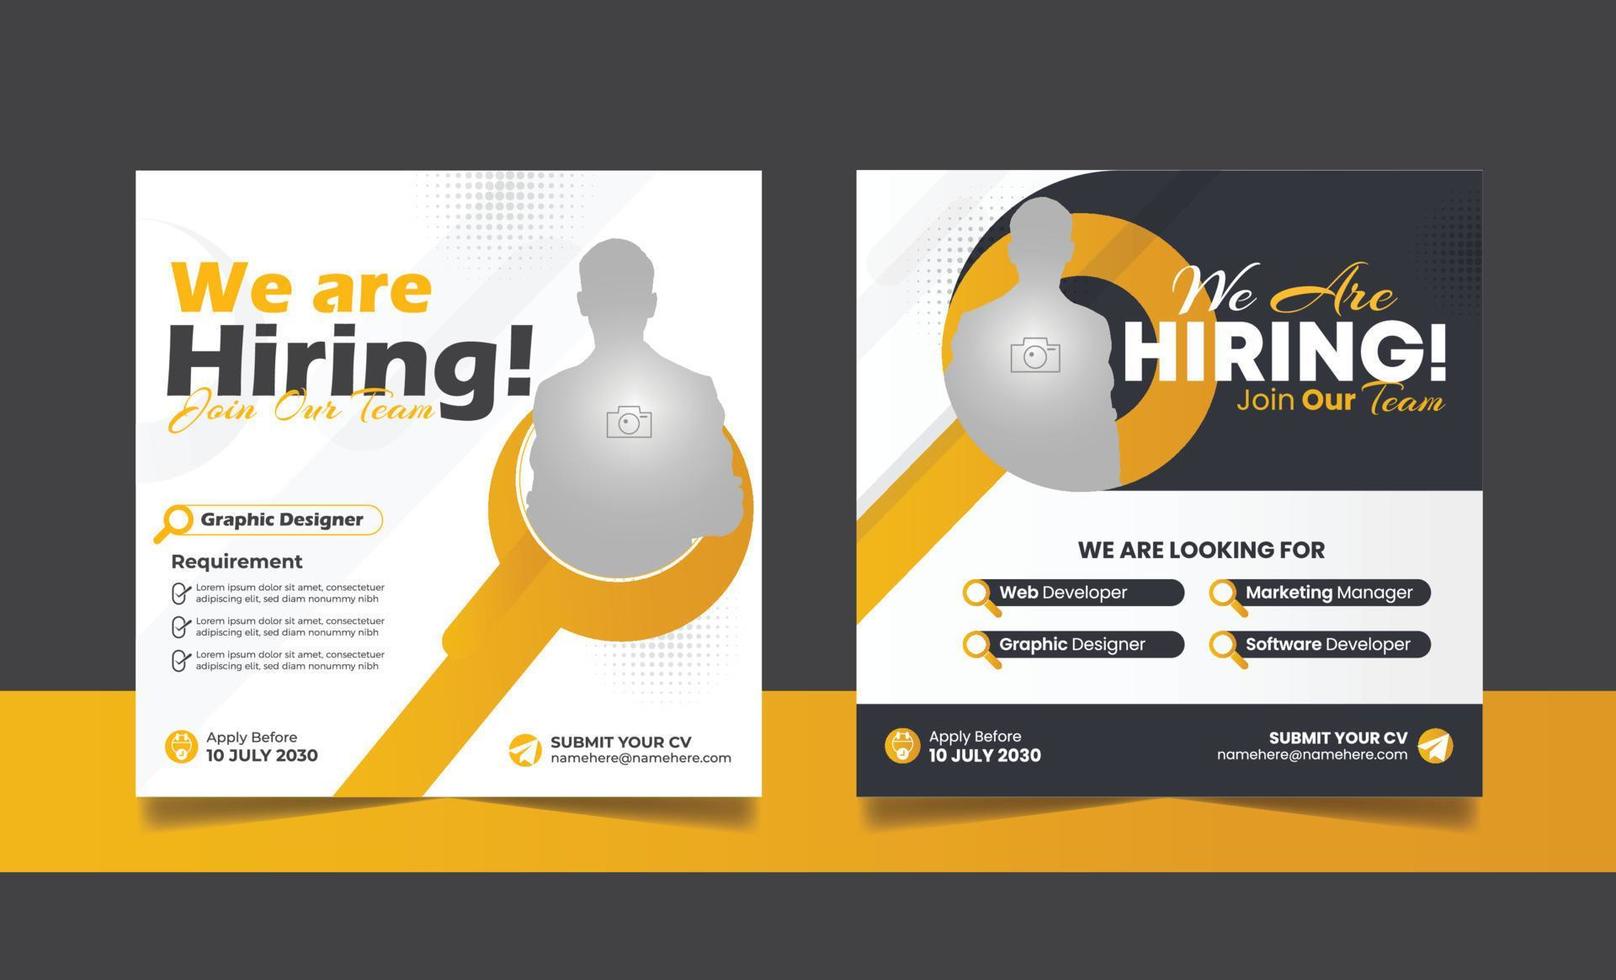 We are hiring job vacancy social media post marketing banner design template. vector